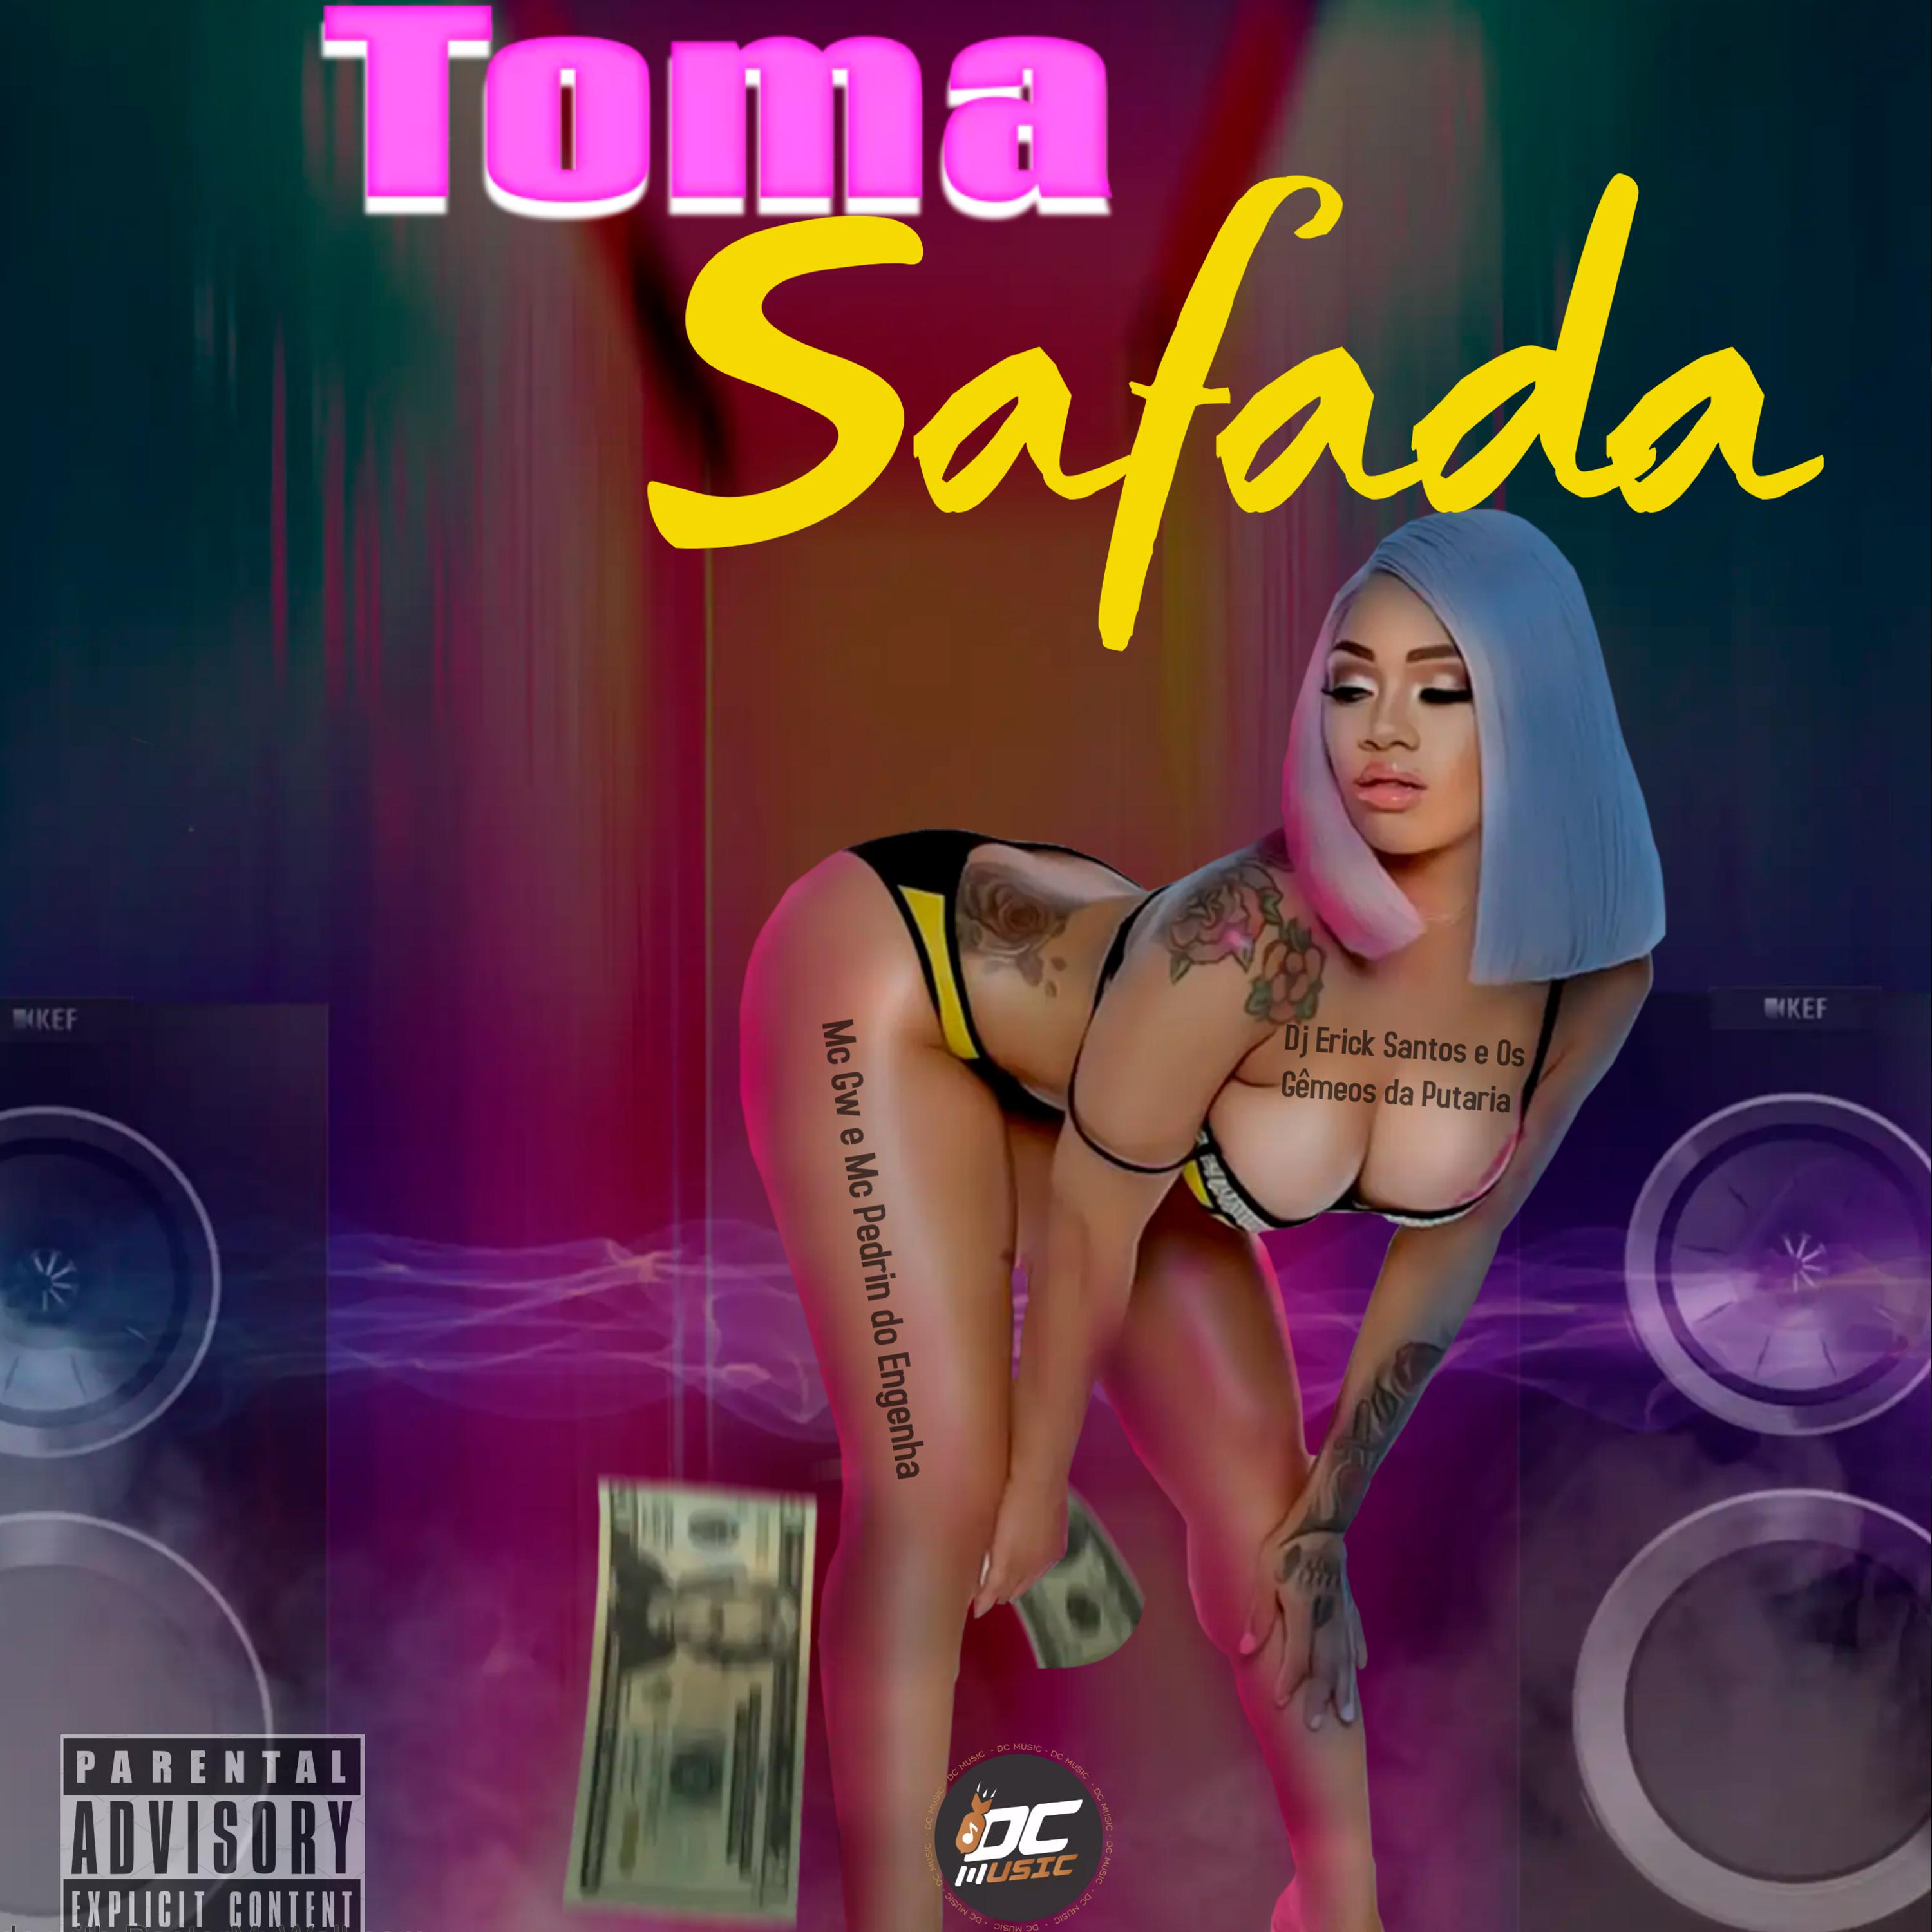 Постер альбома Toma Safada